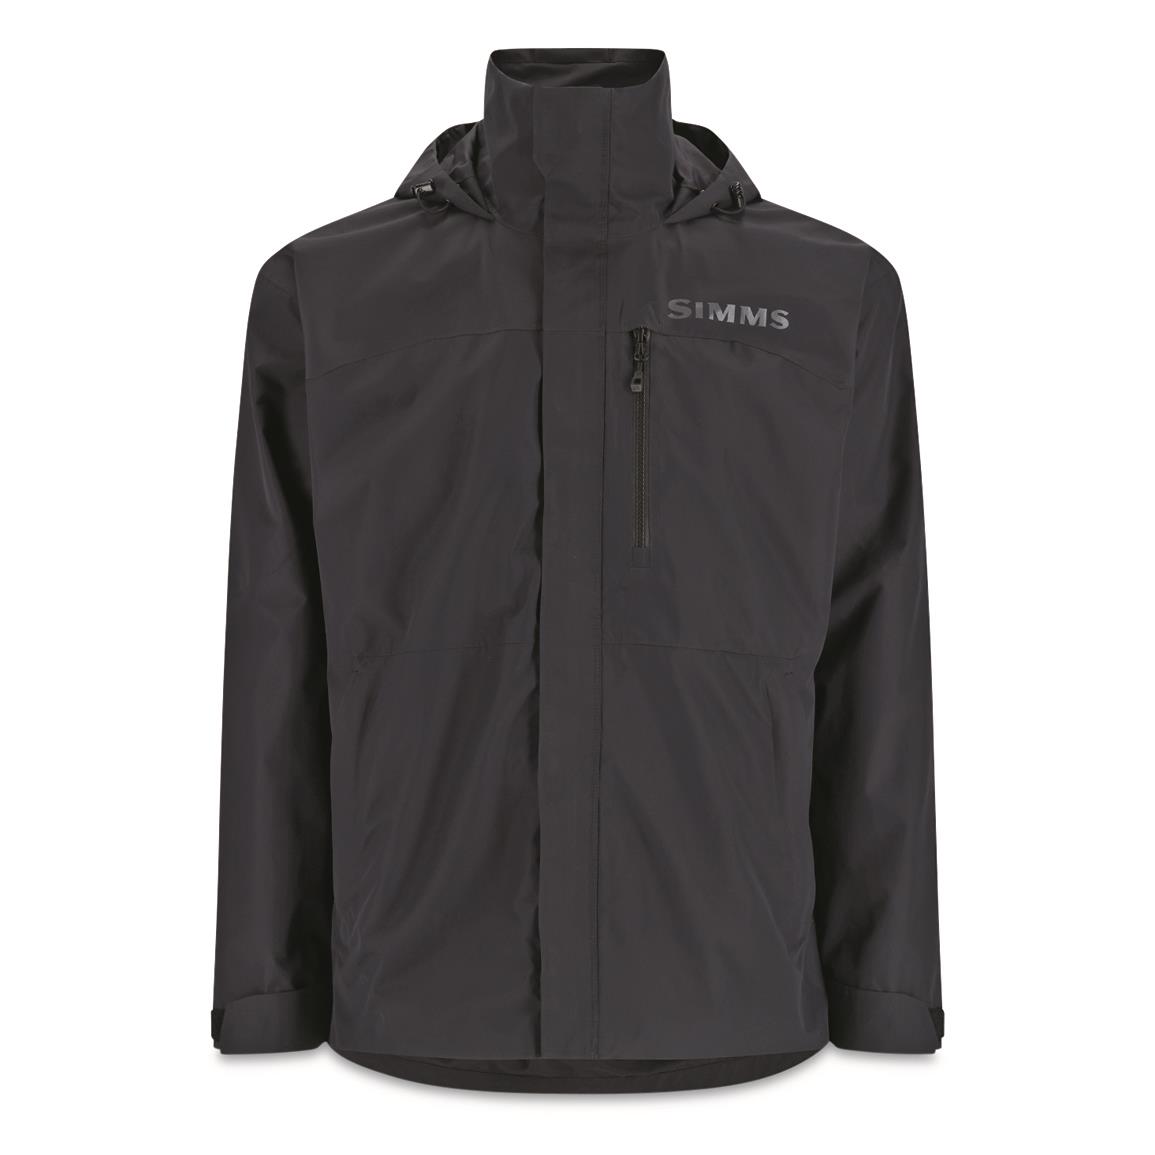 Rapala Rain Jacket - 731623, Jackets, Coats & Rain Gear at Sportsman's Guide